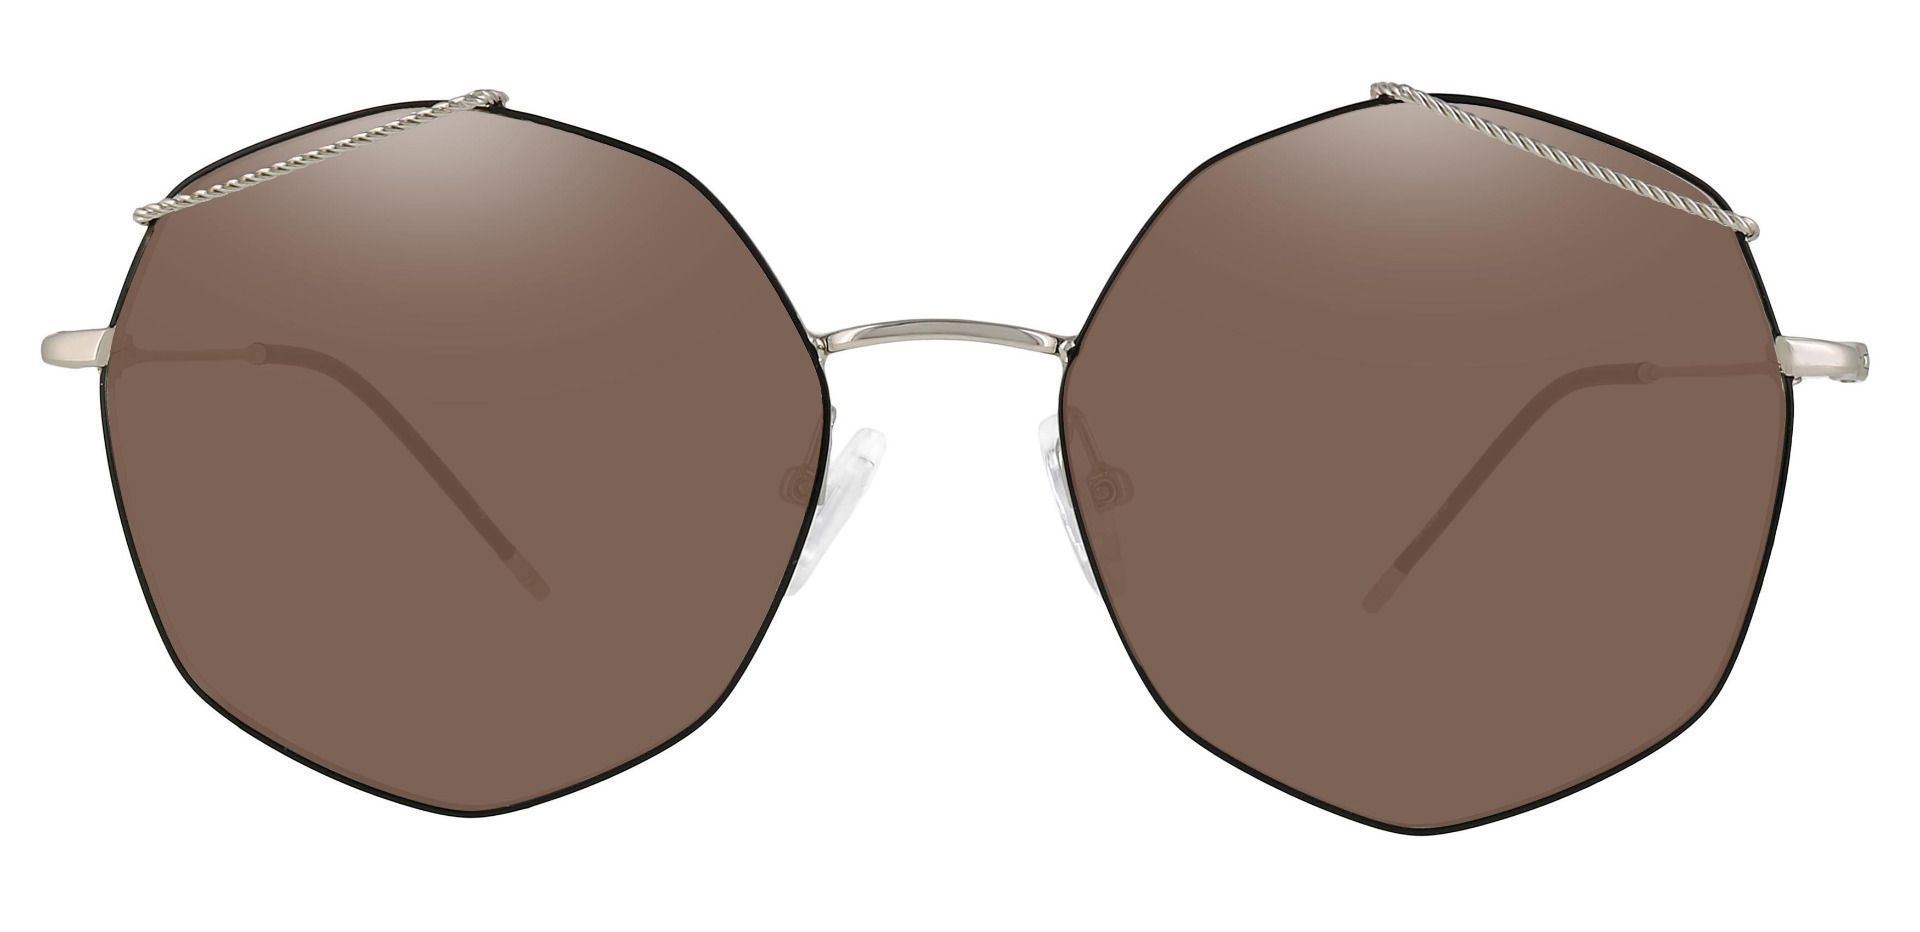 Tango Geometric Non-Rx Sunglasses - Black Frame With Brown Lenses